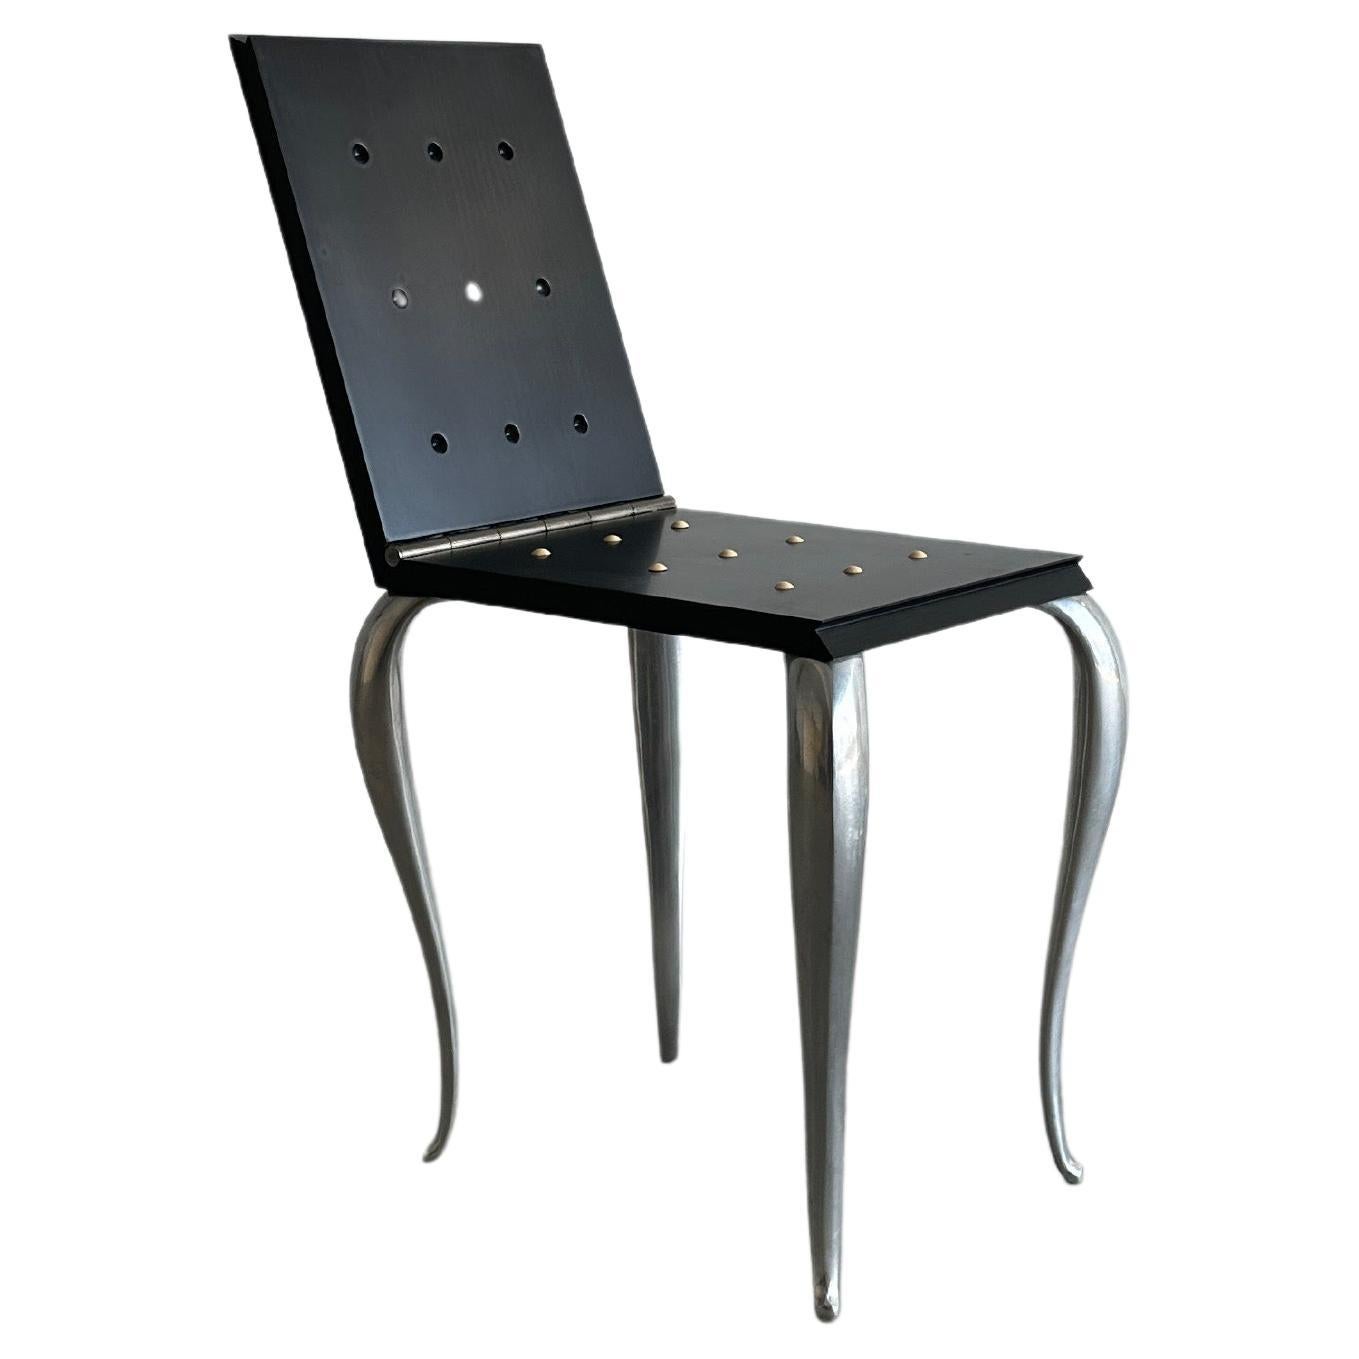 Black postmodern Lola Mundo folding chair/stool by Philippe Starck for Driade 